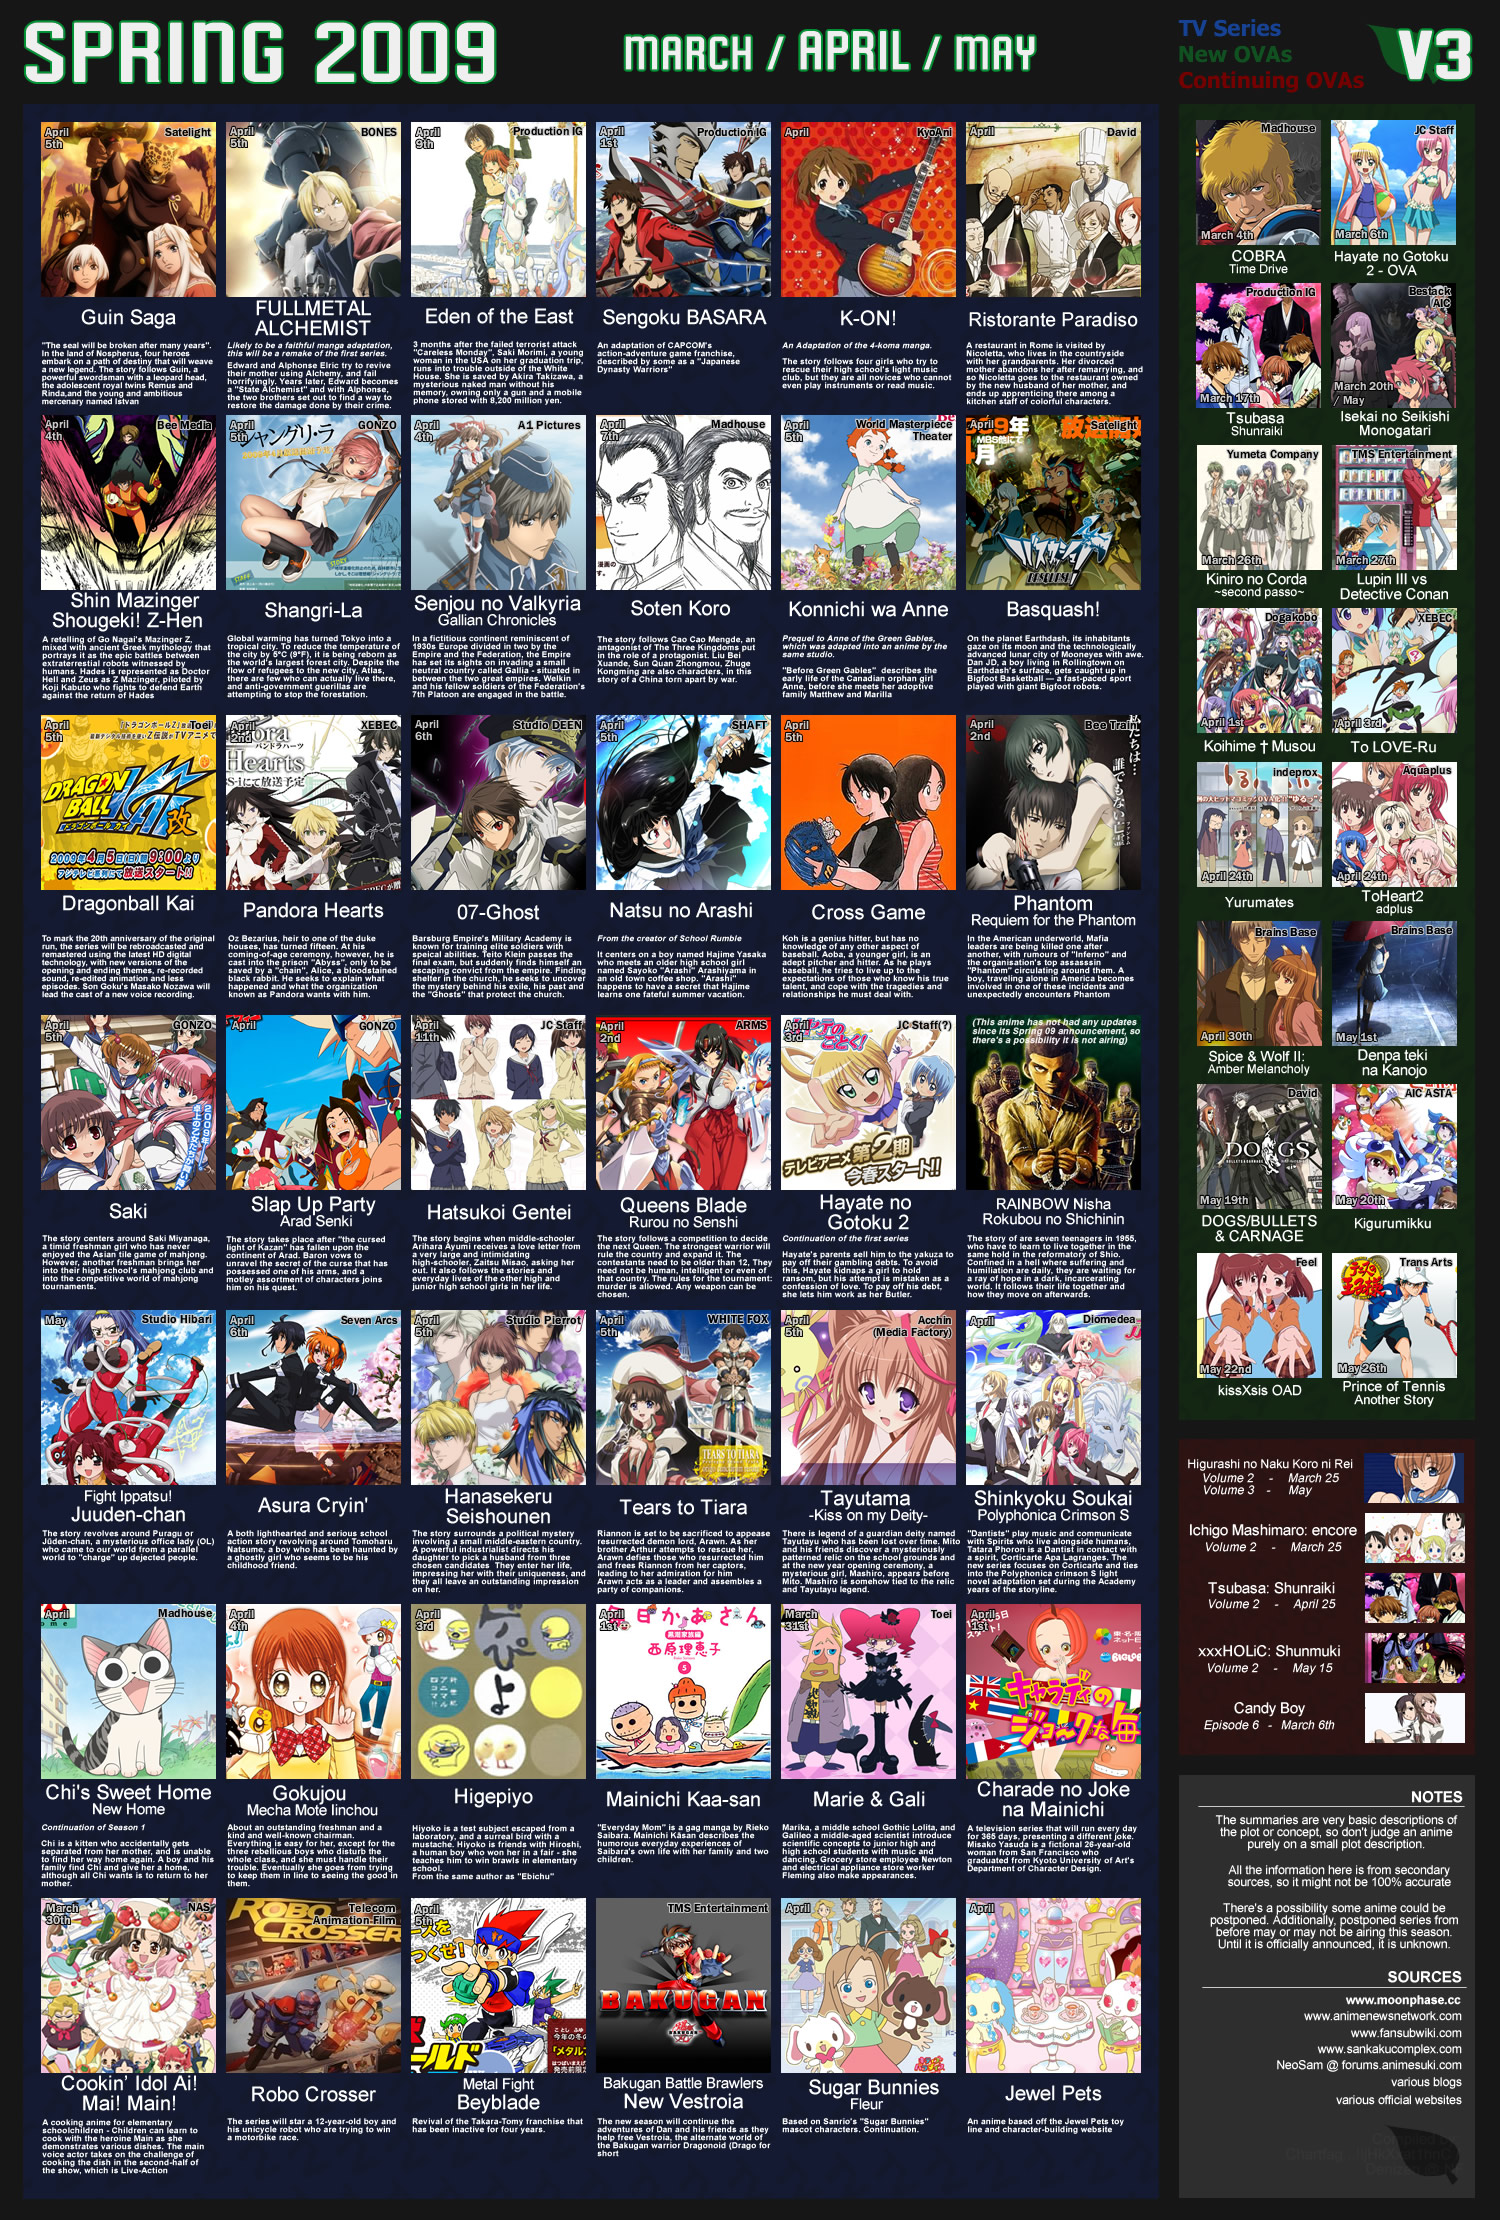 The Anime List Website using React.js and Jikan API